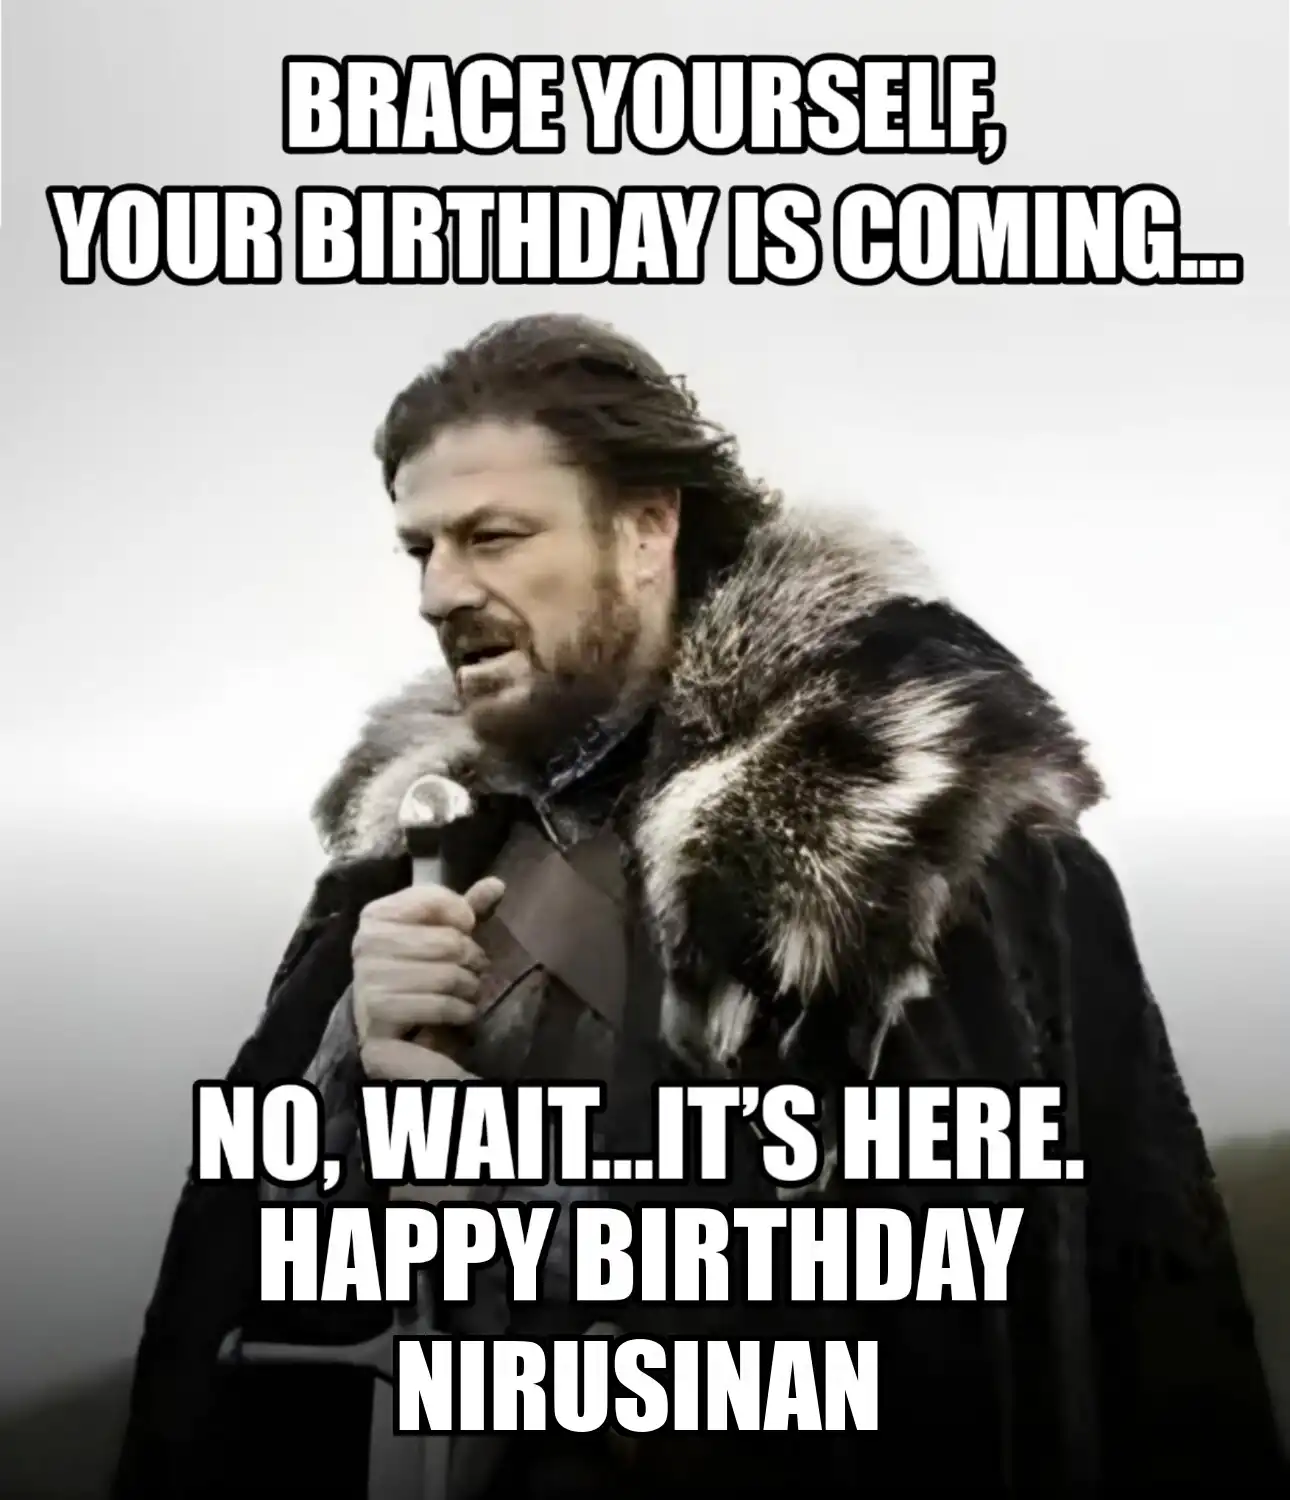 Happy Birthday Nirusinan Brace Yourself Your Birthday Is Coming Meme